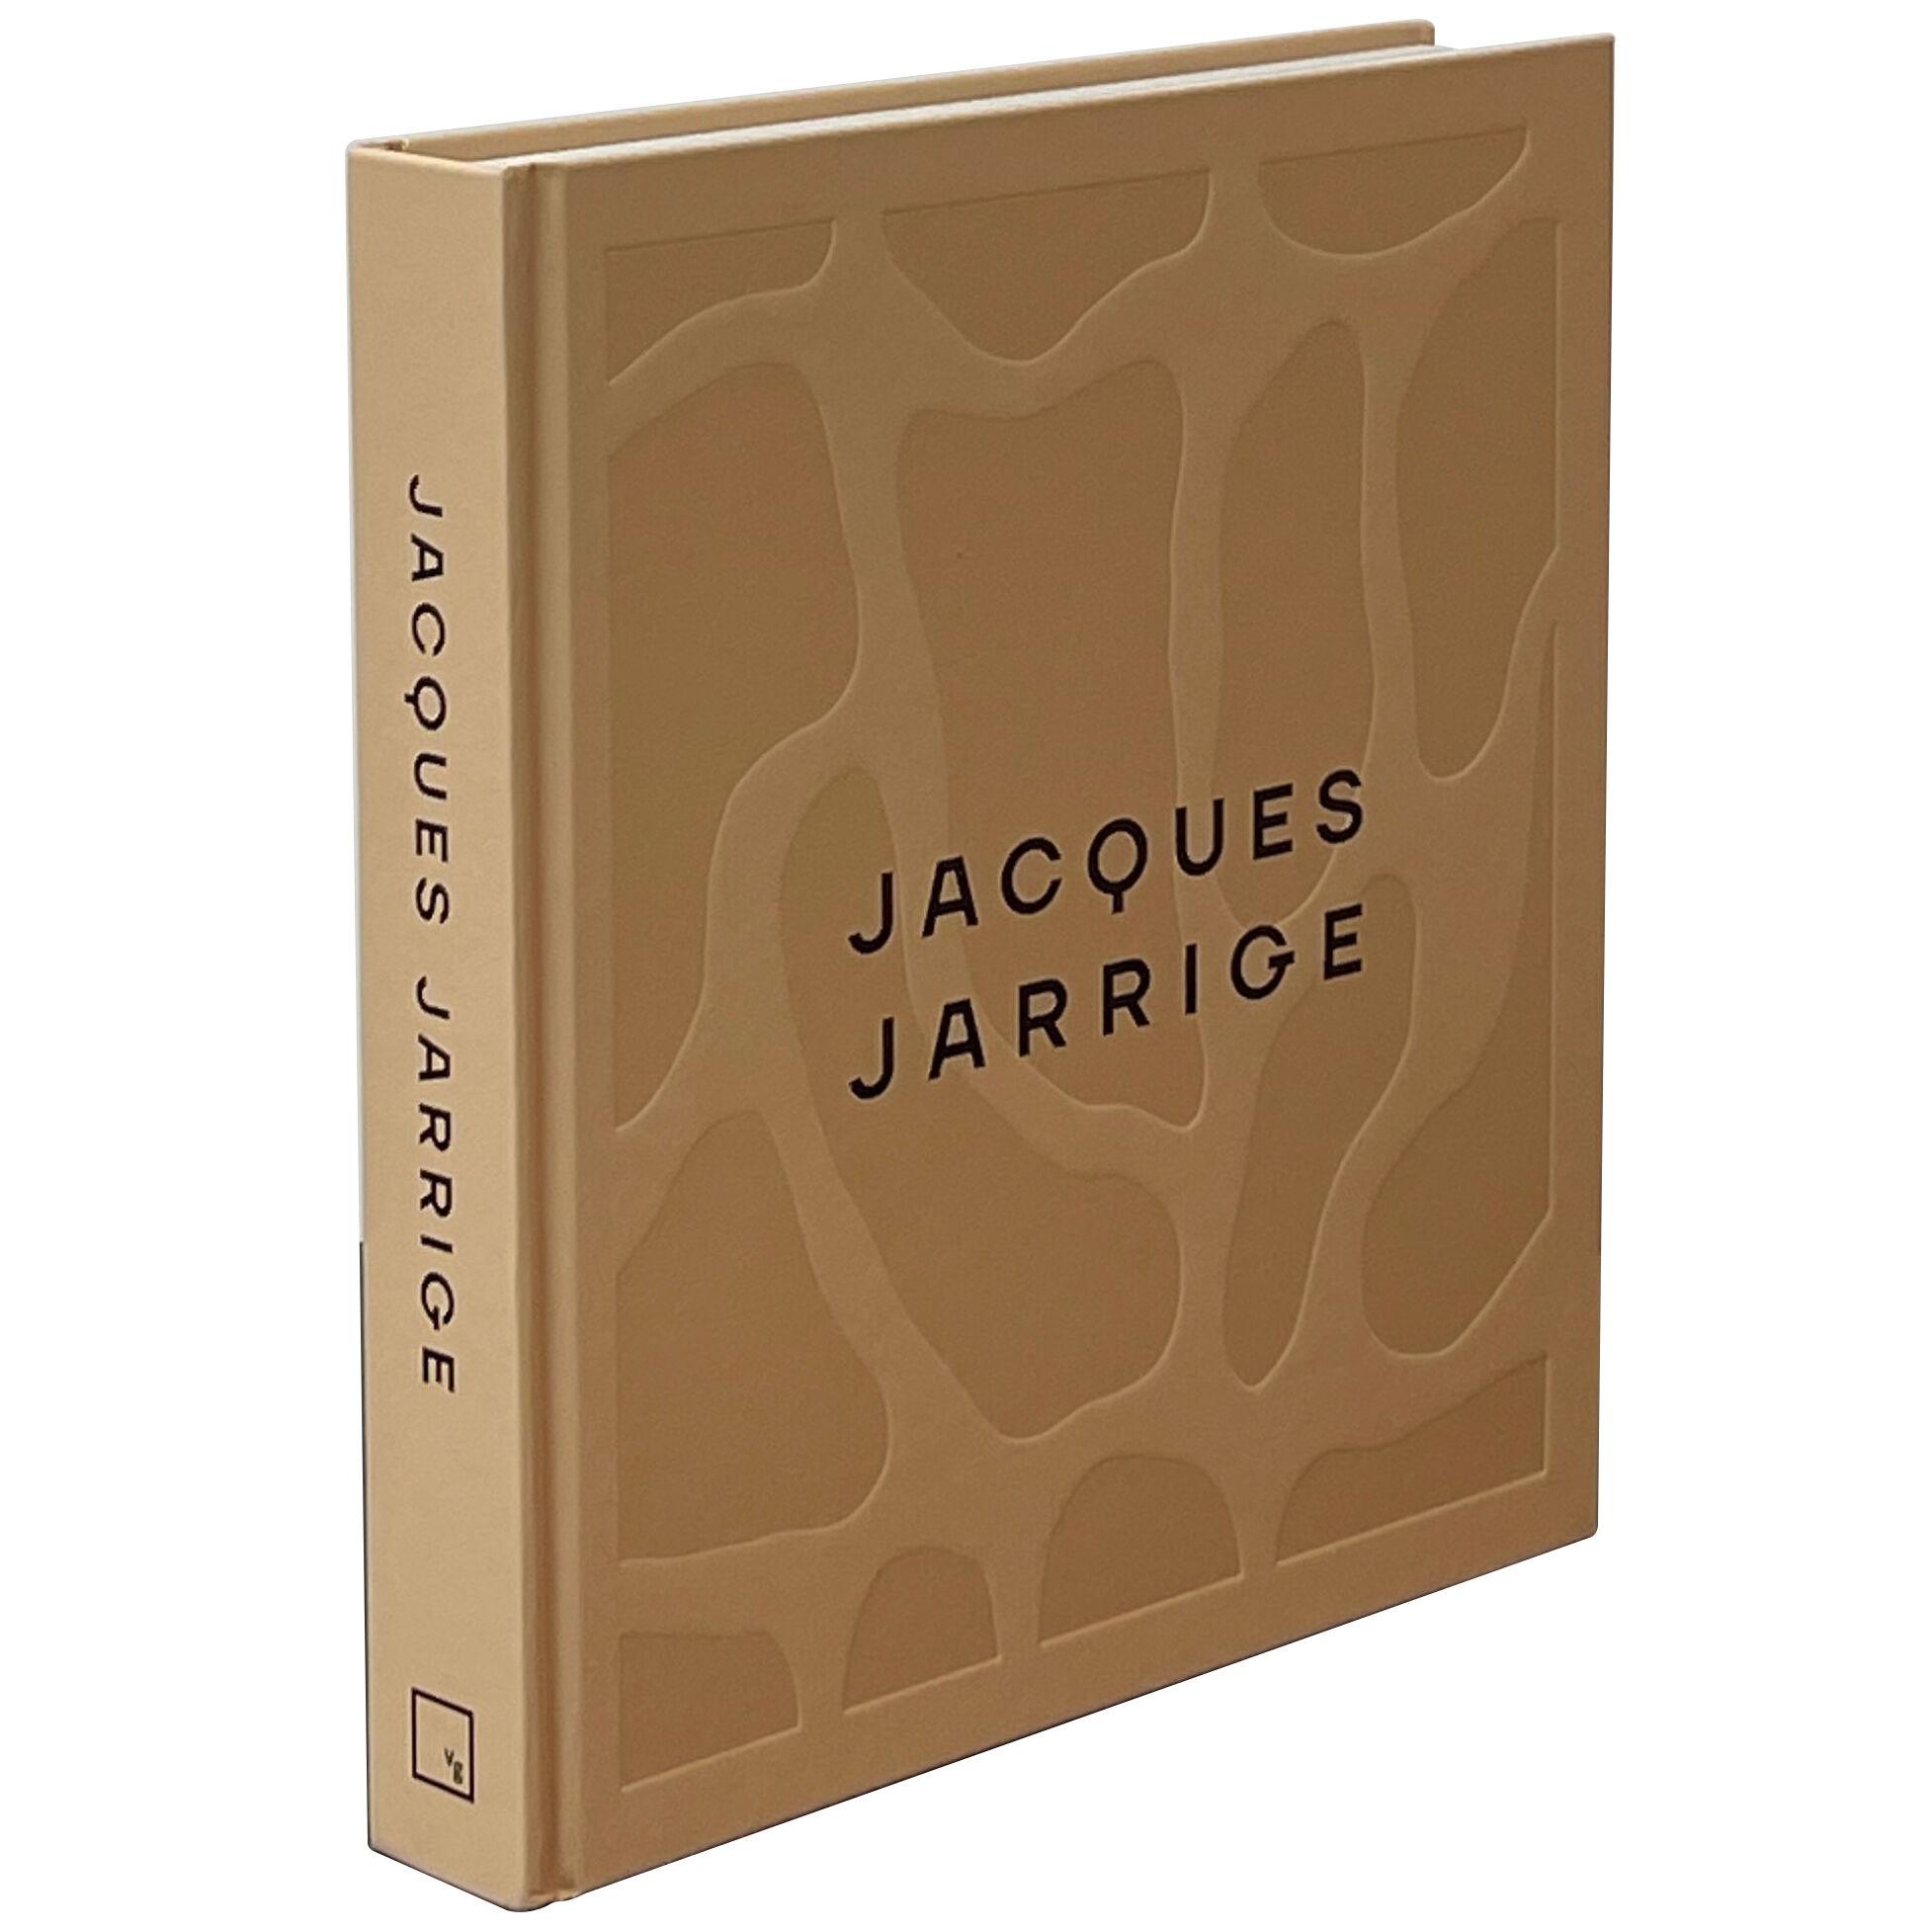 Jacques Jarrige art book